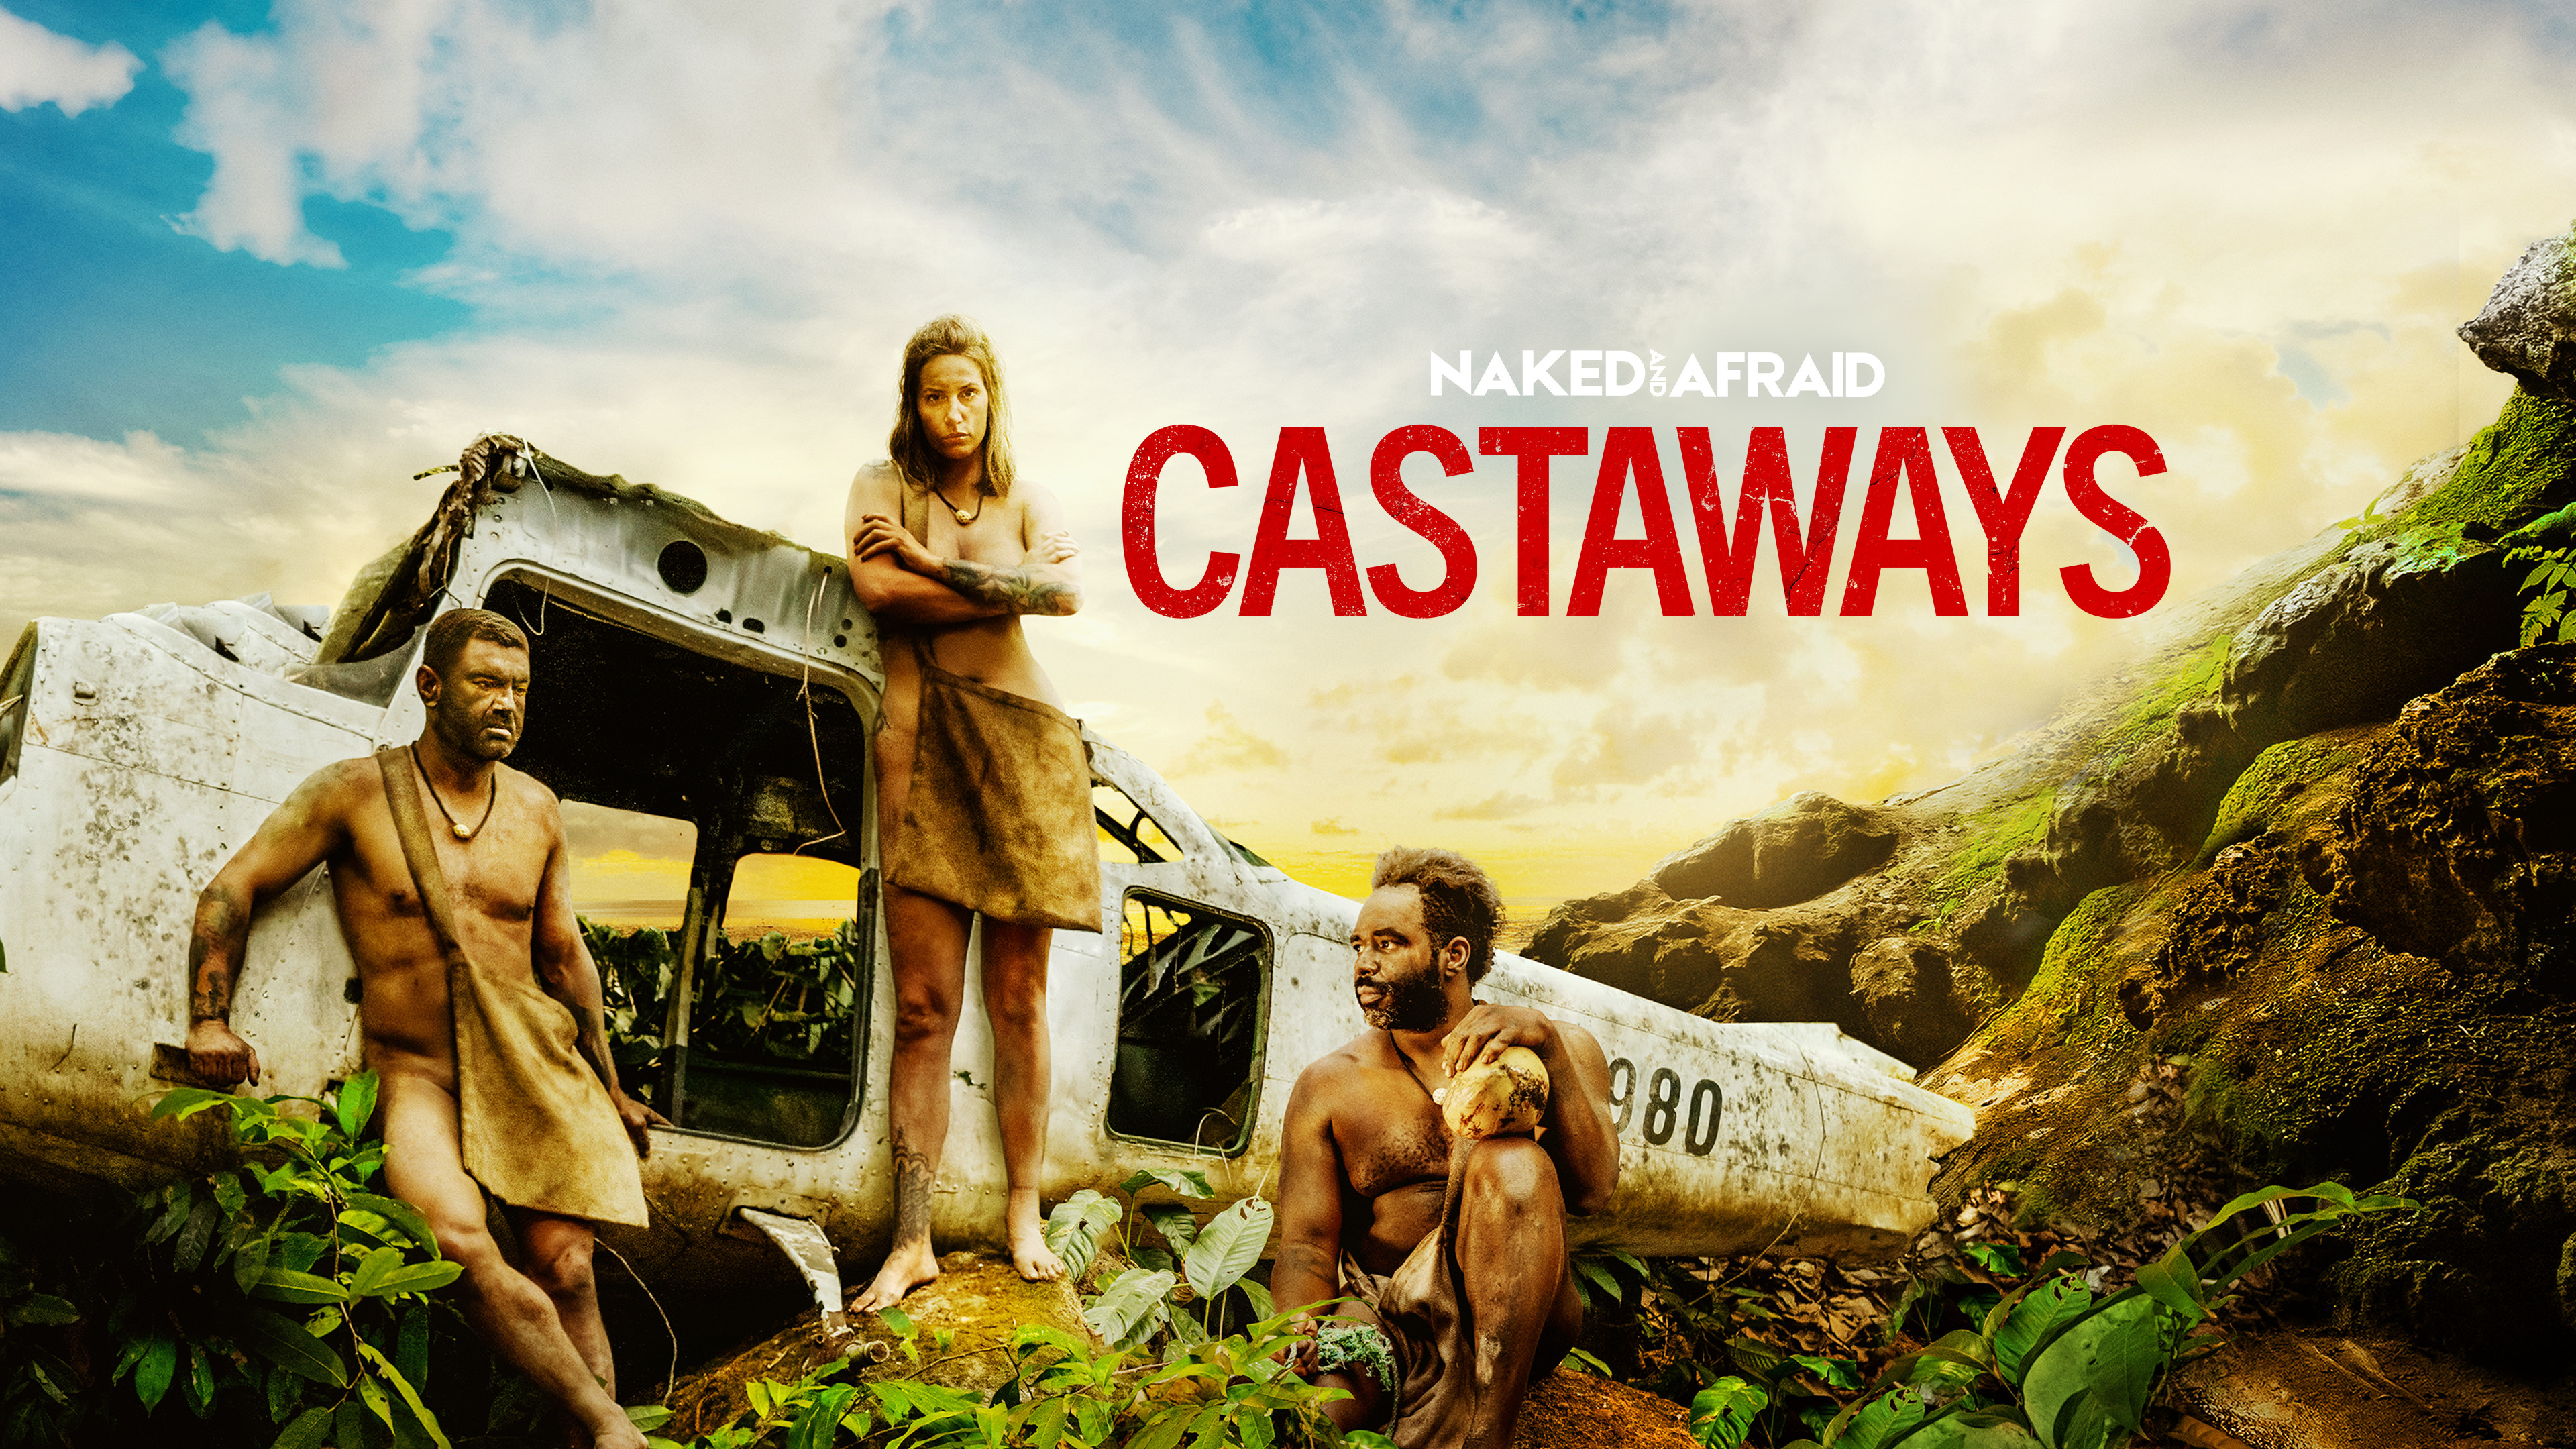 Naked And Afraid: Castaways: Season 1